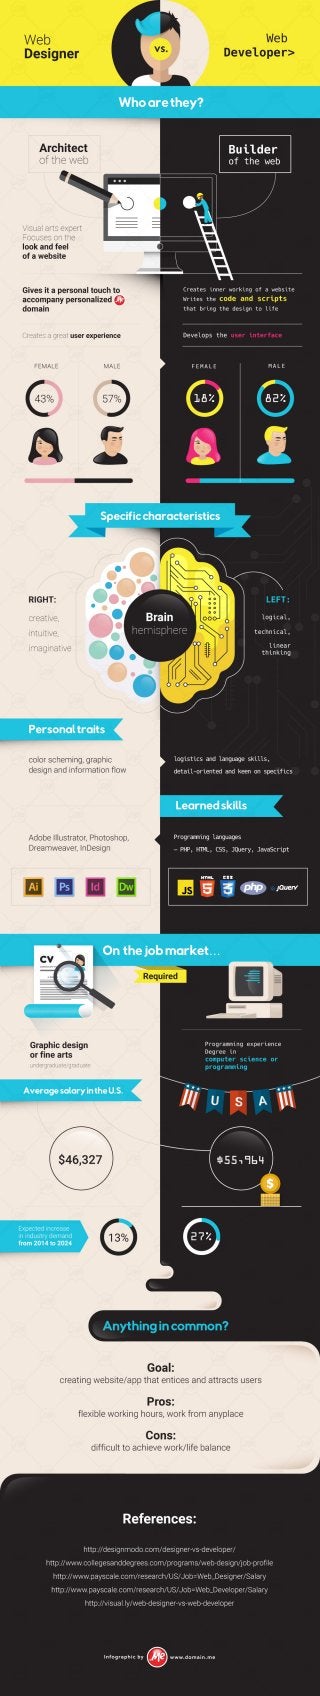 Infographic: Web Designer vs. Web Developer